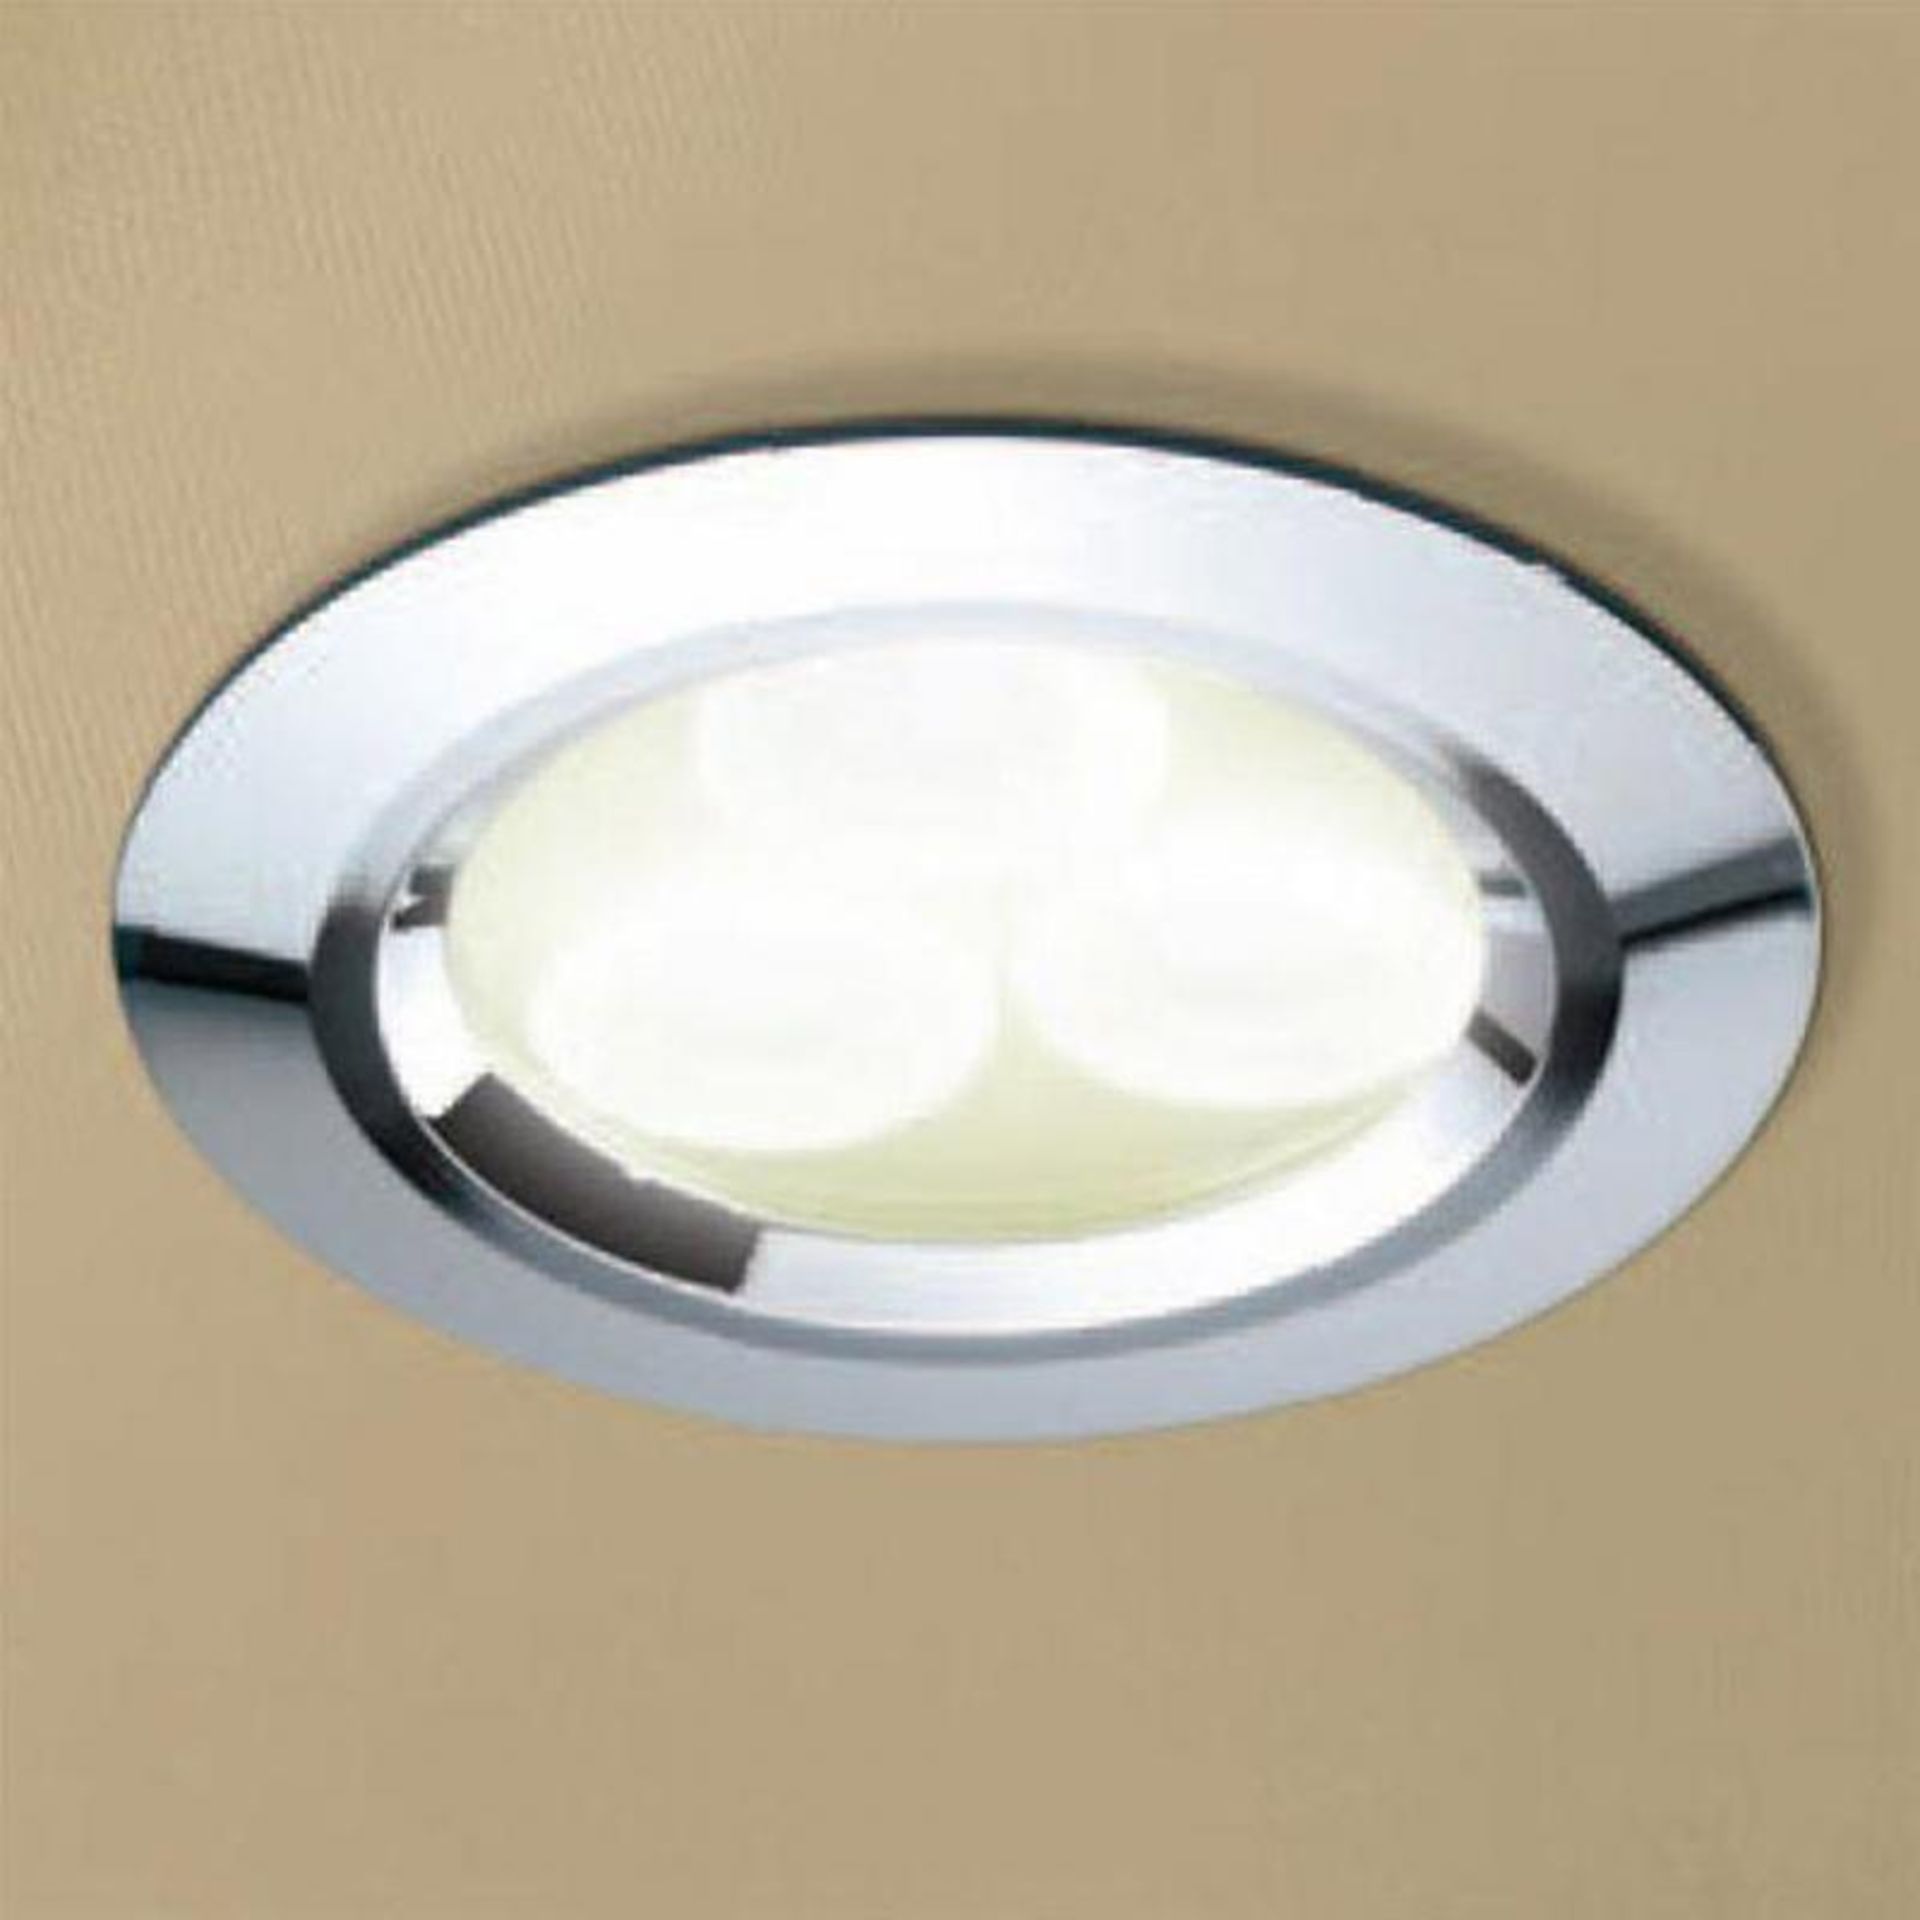 1 x Warm White LED Showerlight, Chrome - New Boxed Stock - CL364 - Ref: PAL Edin/1 10813 - Location: